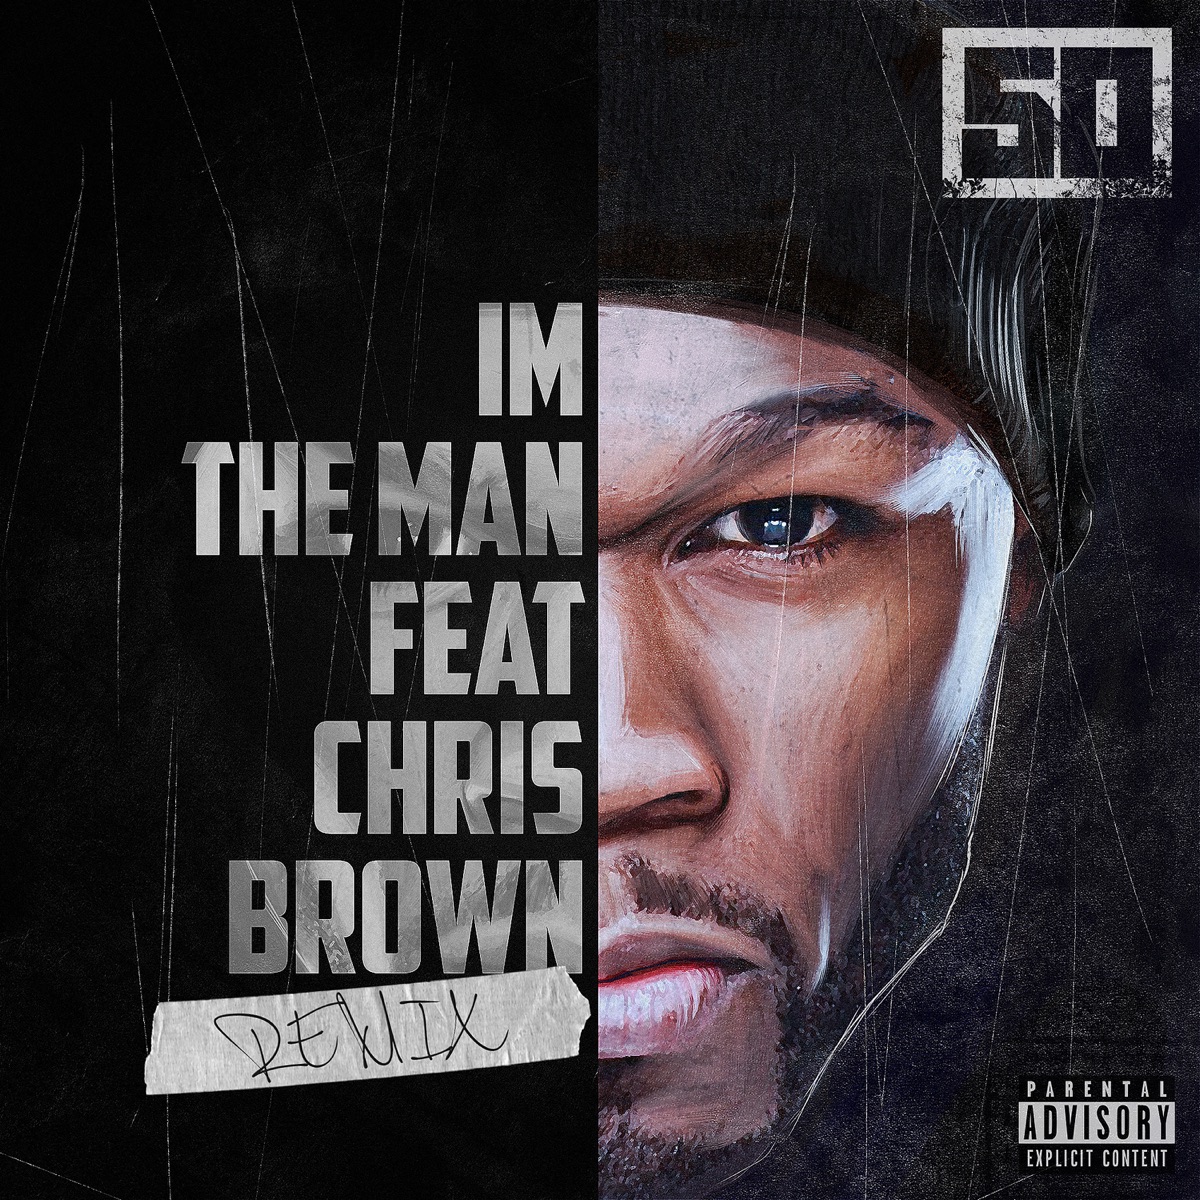 11:11 - Album by Chris Brown